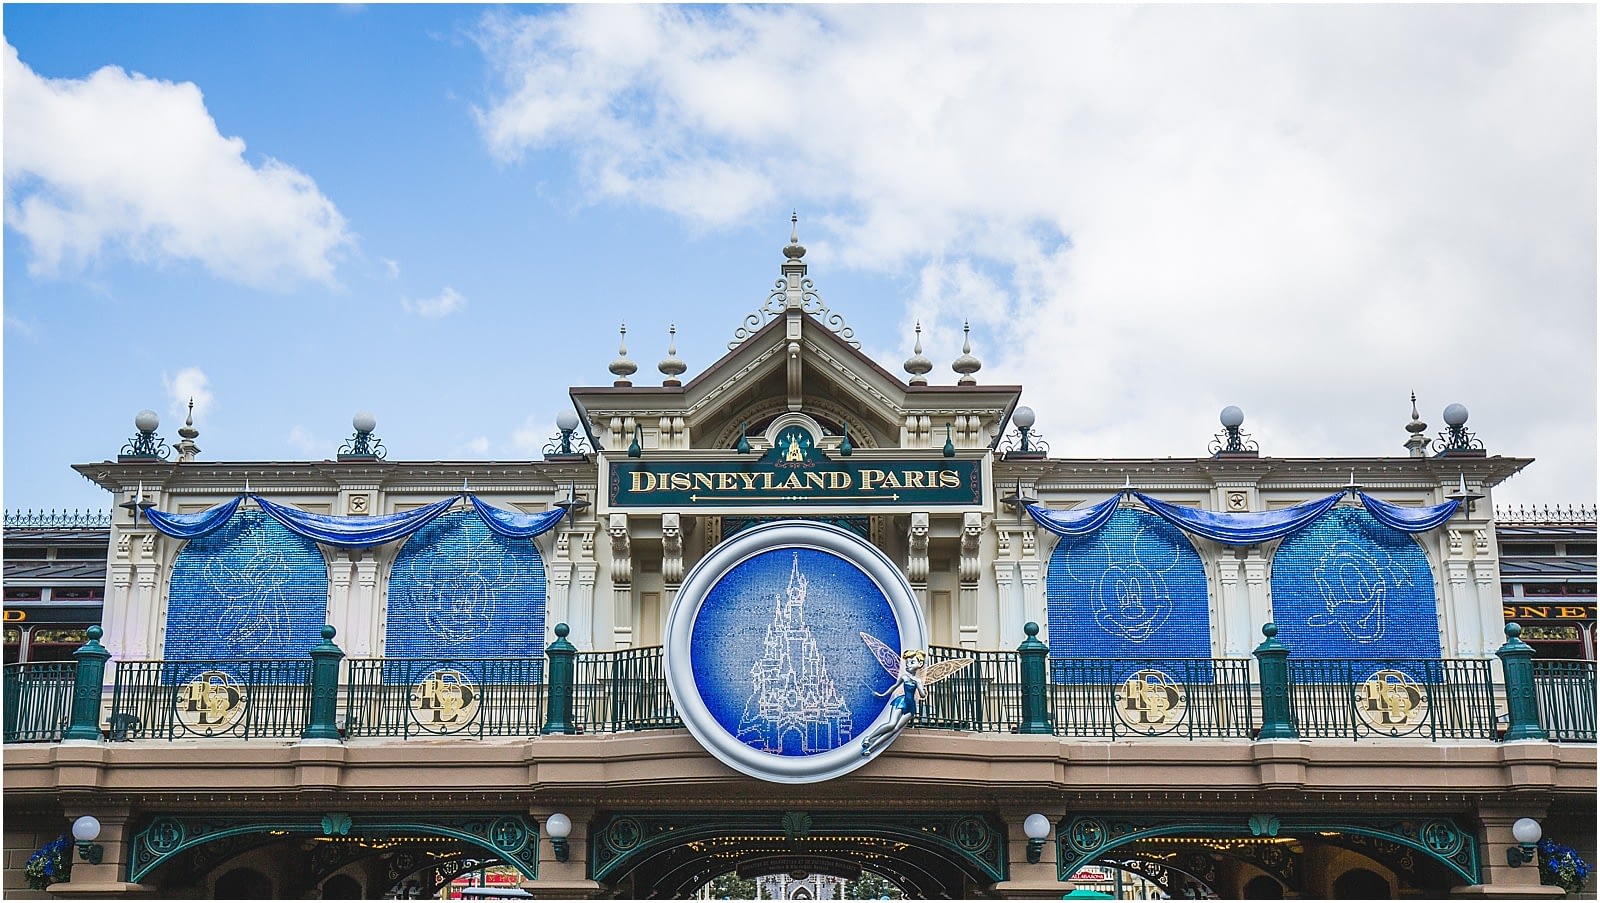 Disneyland Paris 25th Anniversary